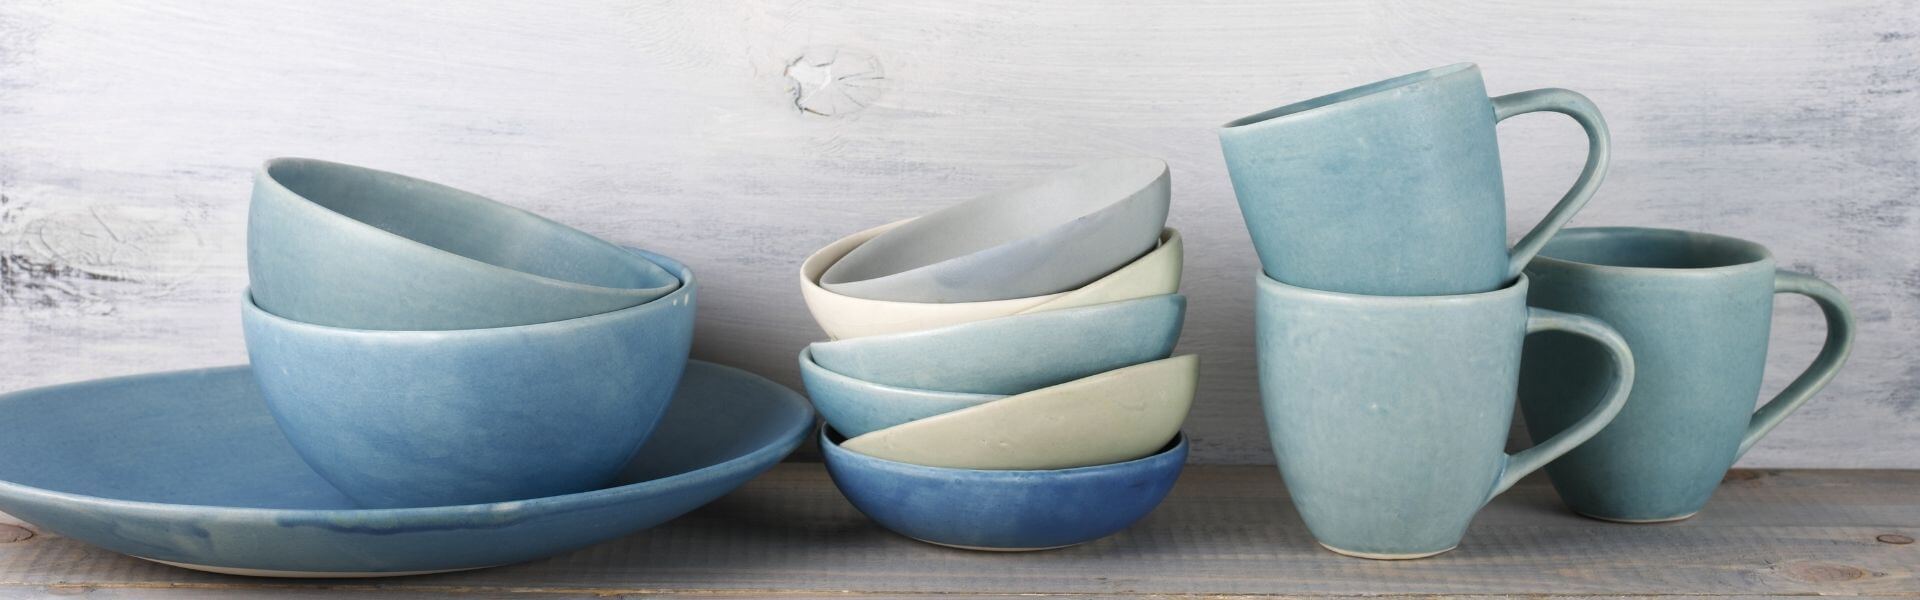 Ceramic platters - Ceramic Mugs - Happy Times